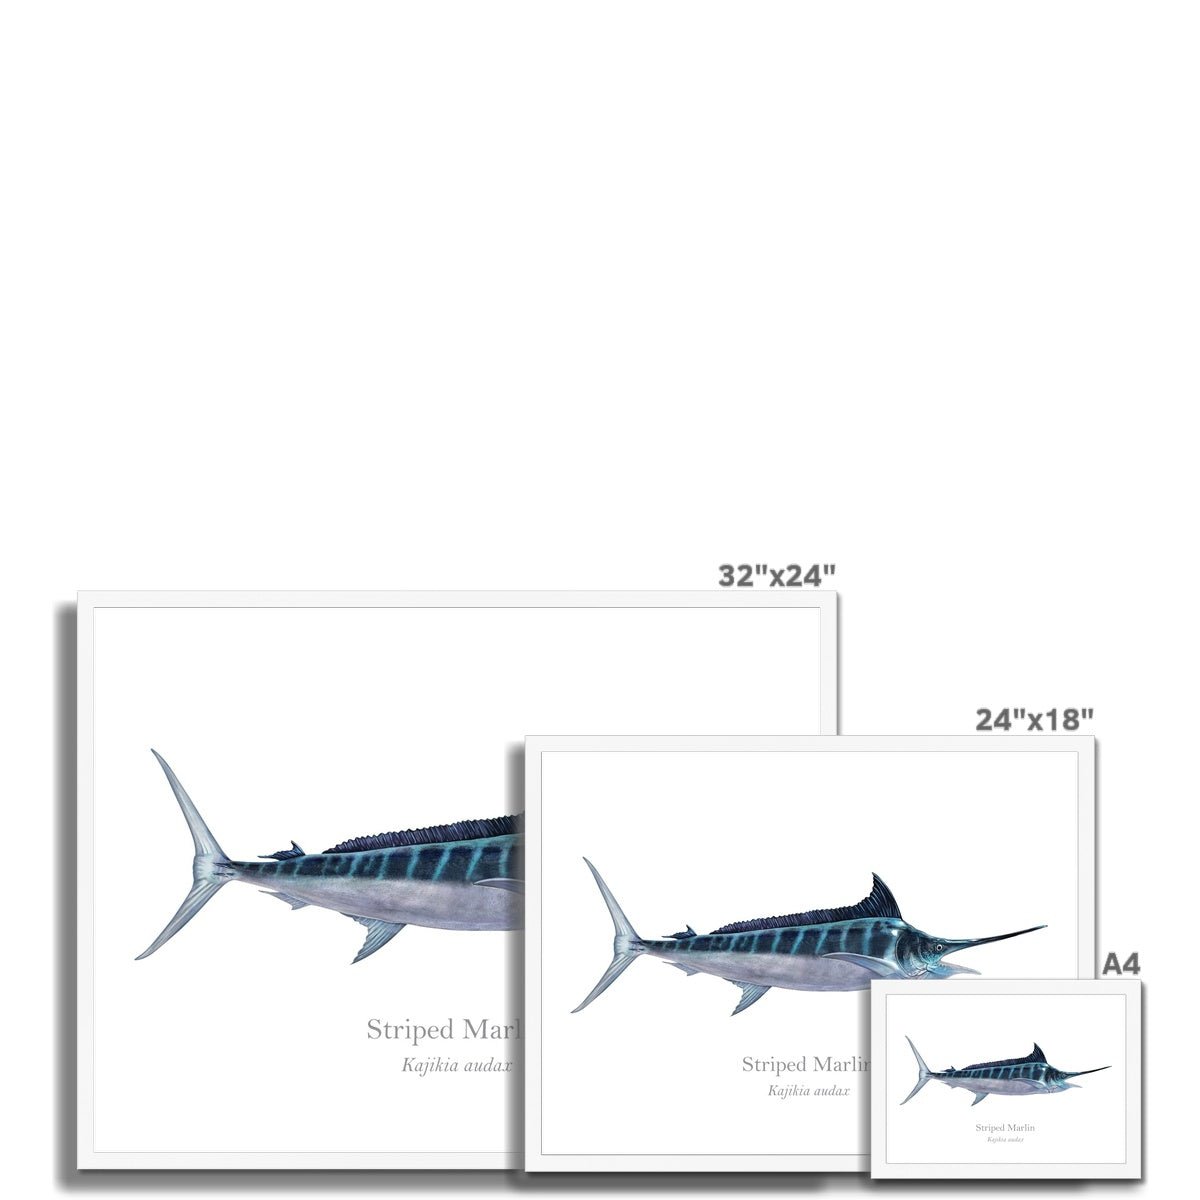 Striped Marlin - Framed Print - With Scientific Name - madfishlab.com